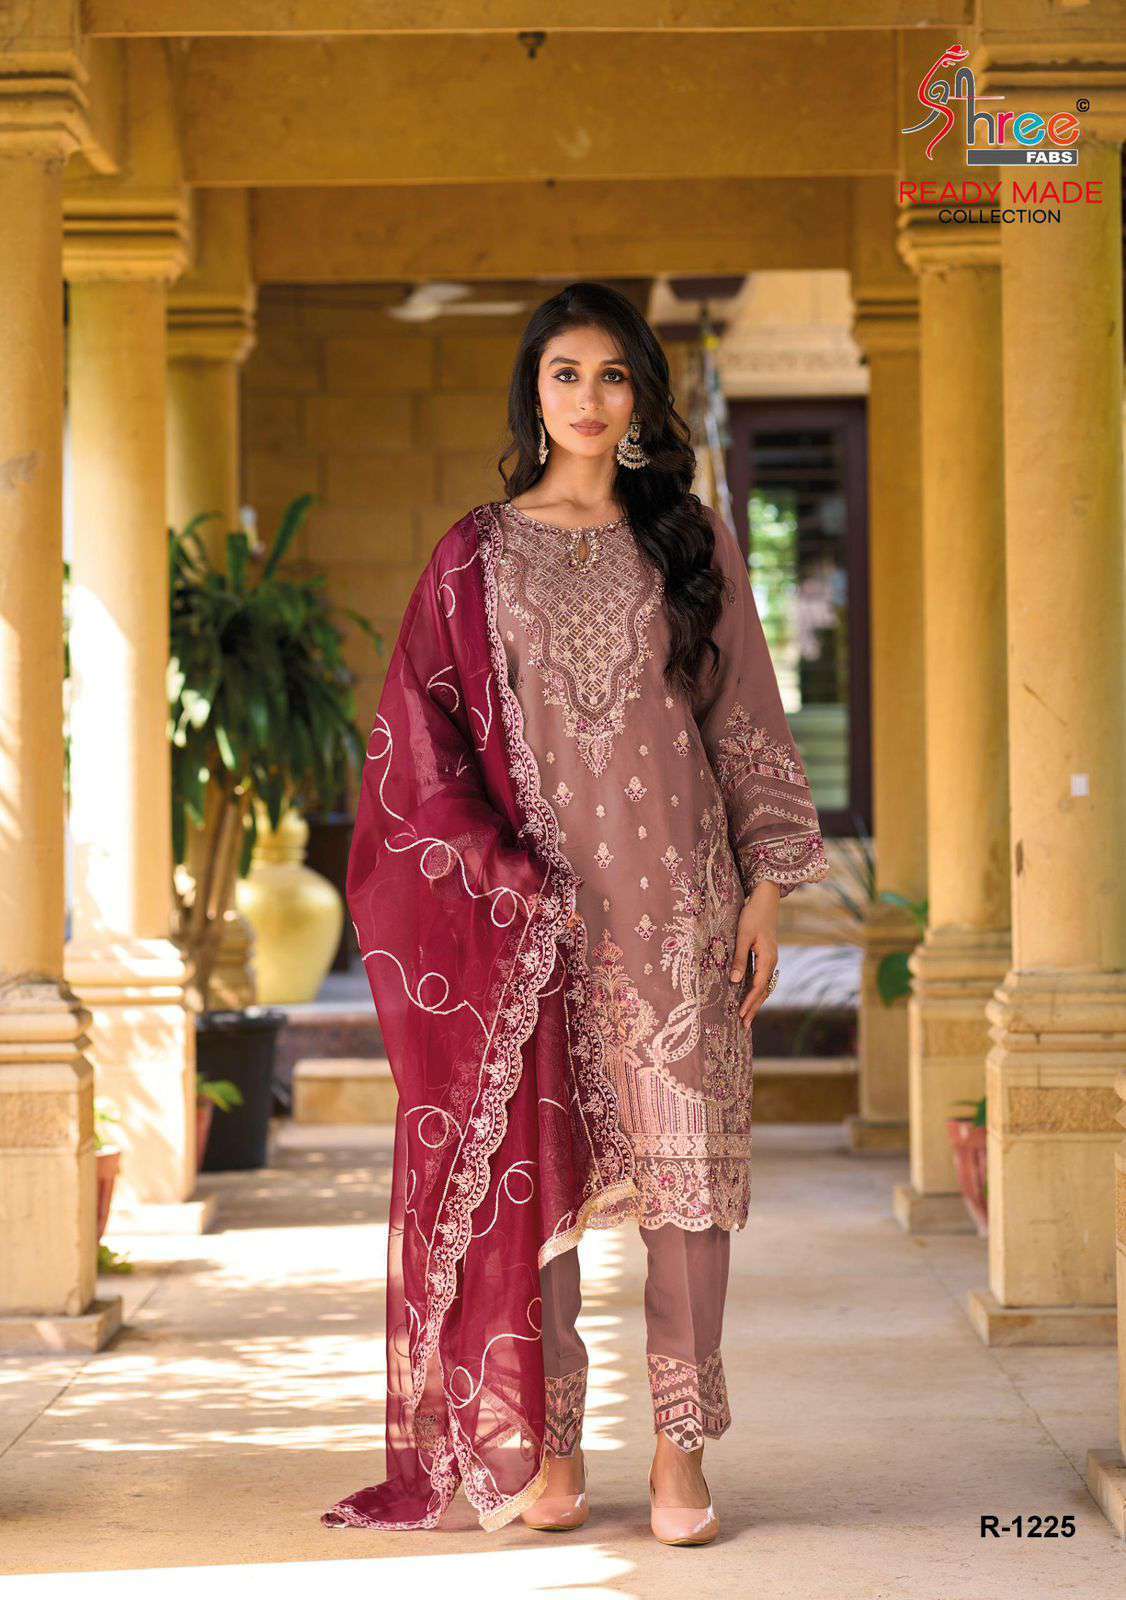 Shree Fabs R 1225 Colors Wedding Wear Pakistani Designer Organza Dress Dealers